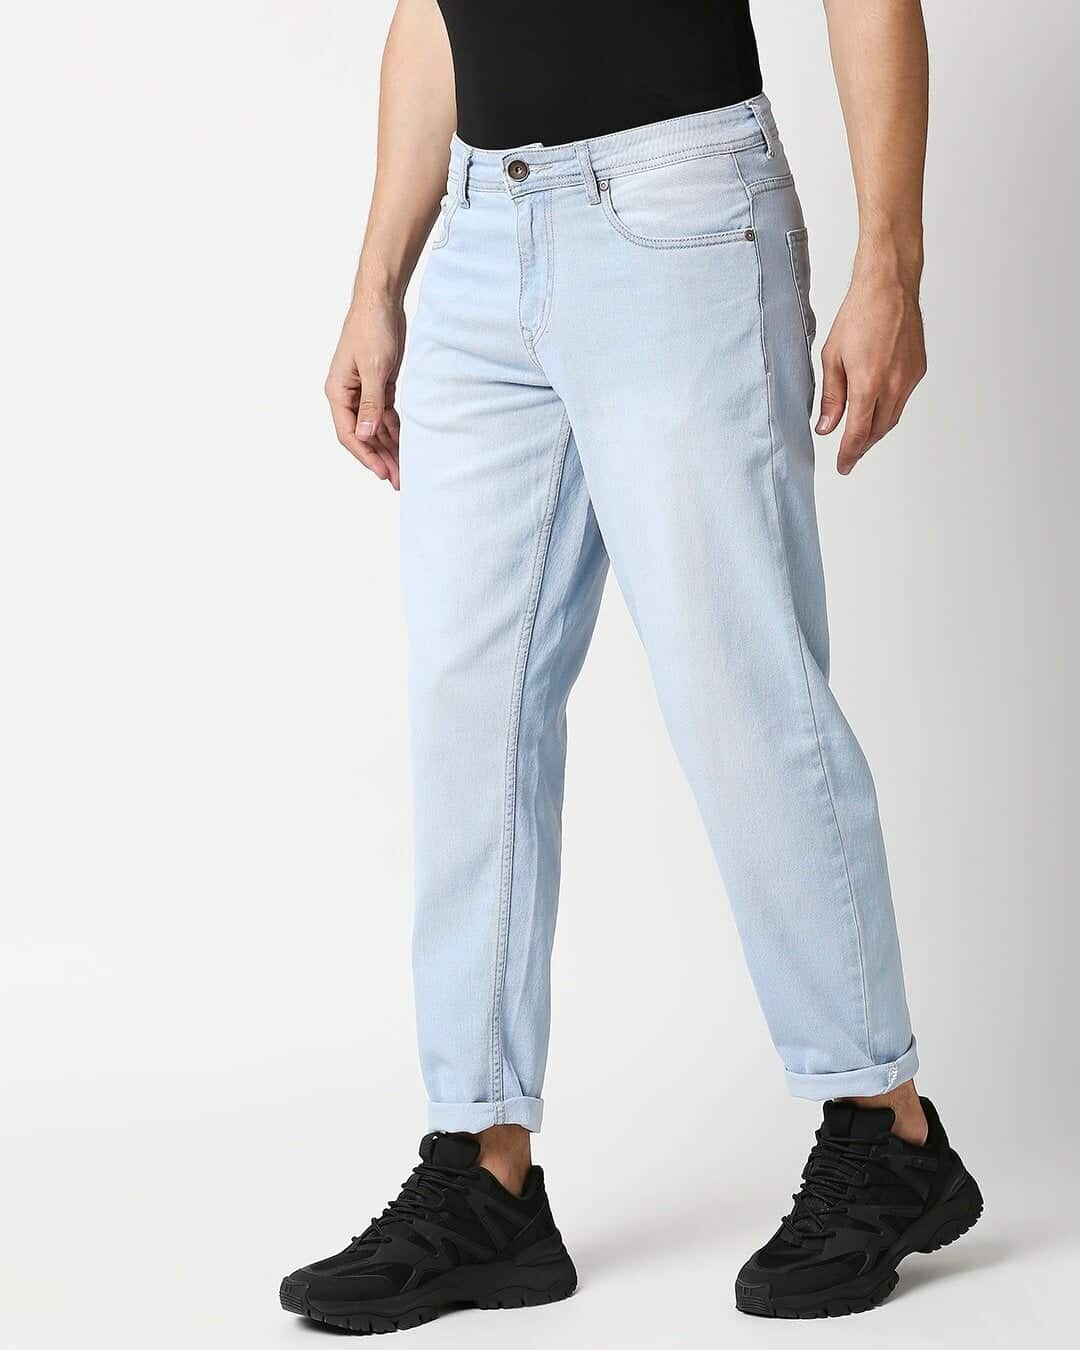 Shop Mens Blue Washed Slim Fit Mid Rise Jeans With Belt Loopsmbdrhs1027-Back